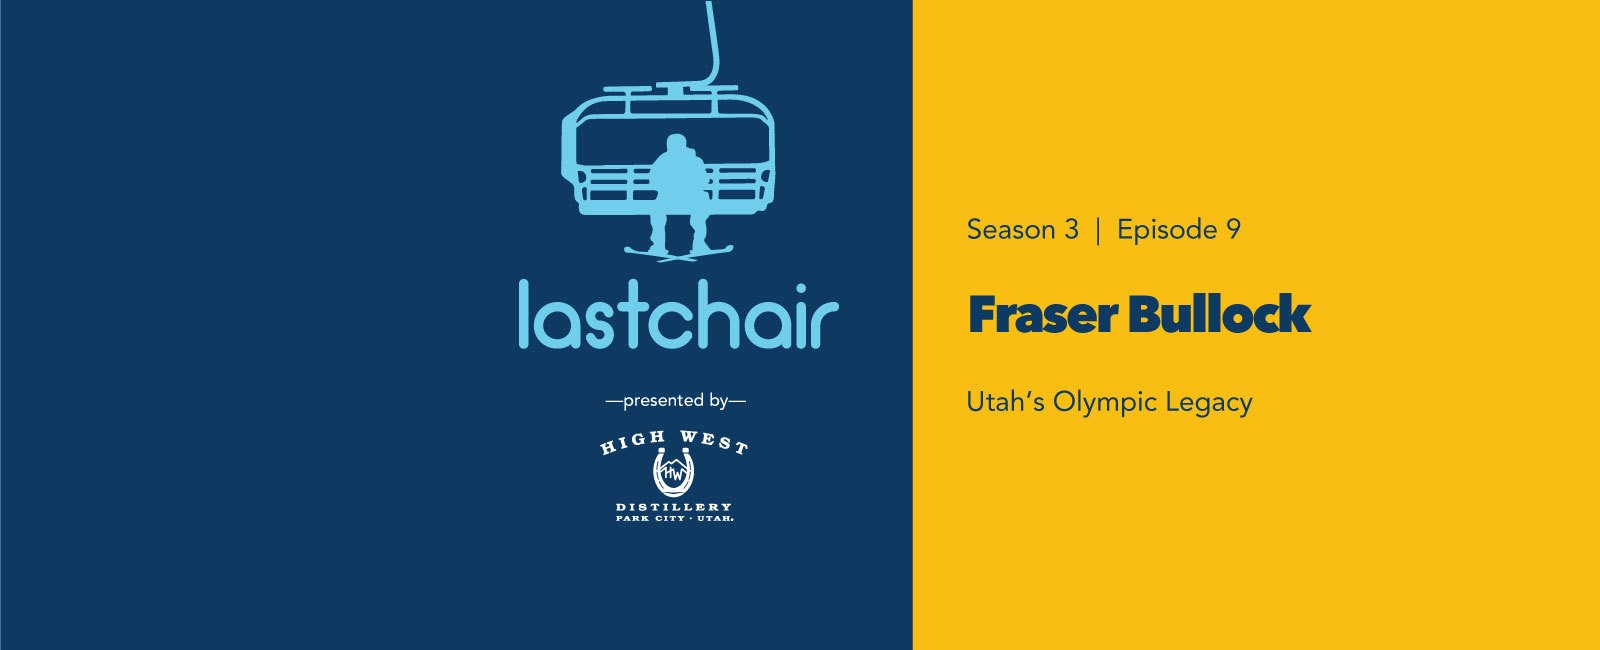 Fraser Bullock: Utah's Olympic Legacy